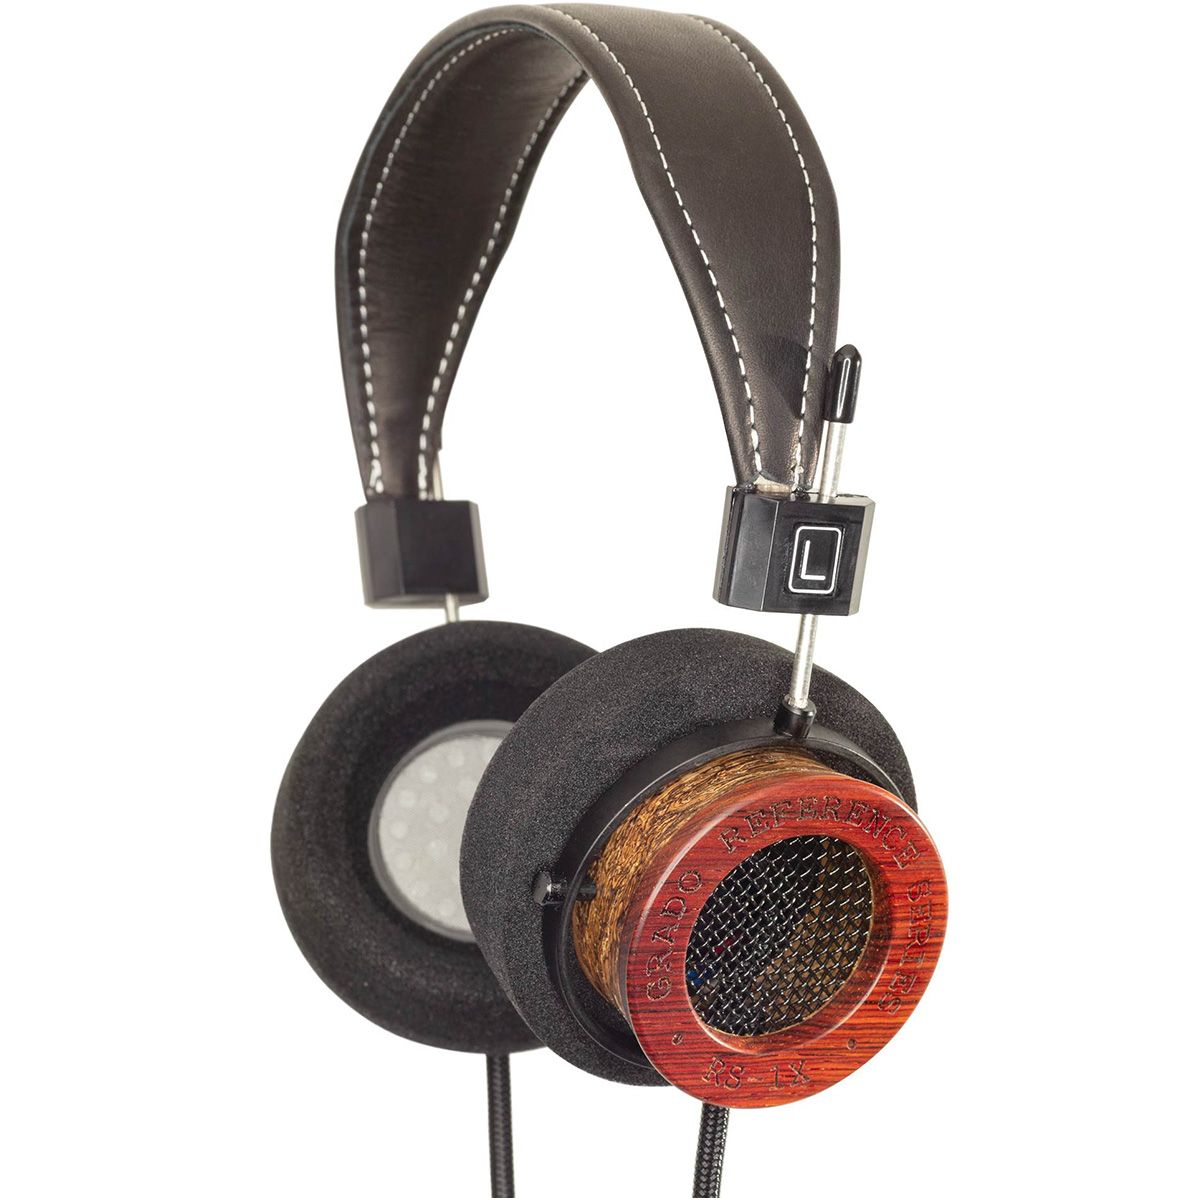 Grado RS1x Reference Series On-Ear Headphones